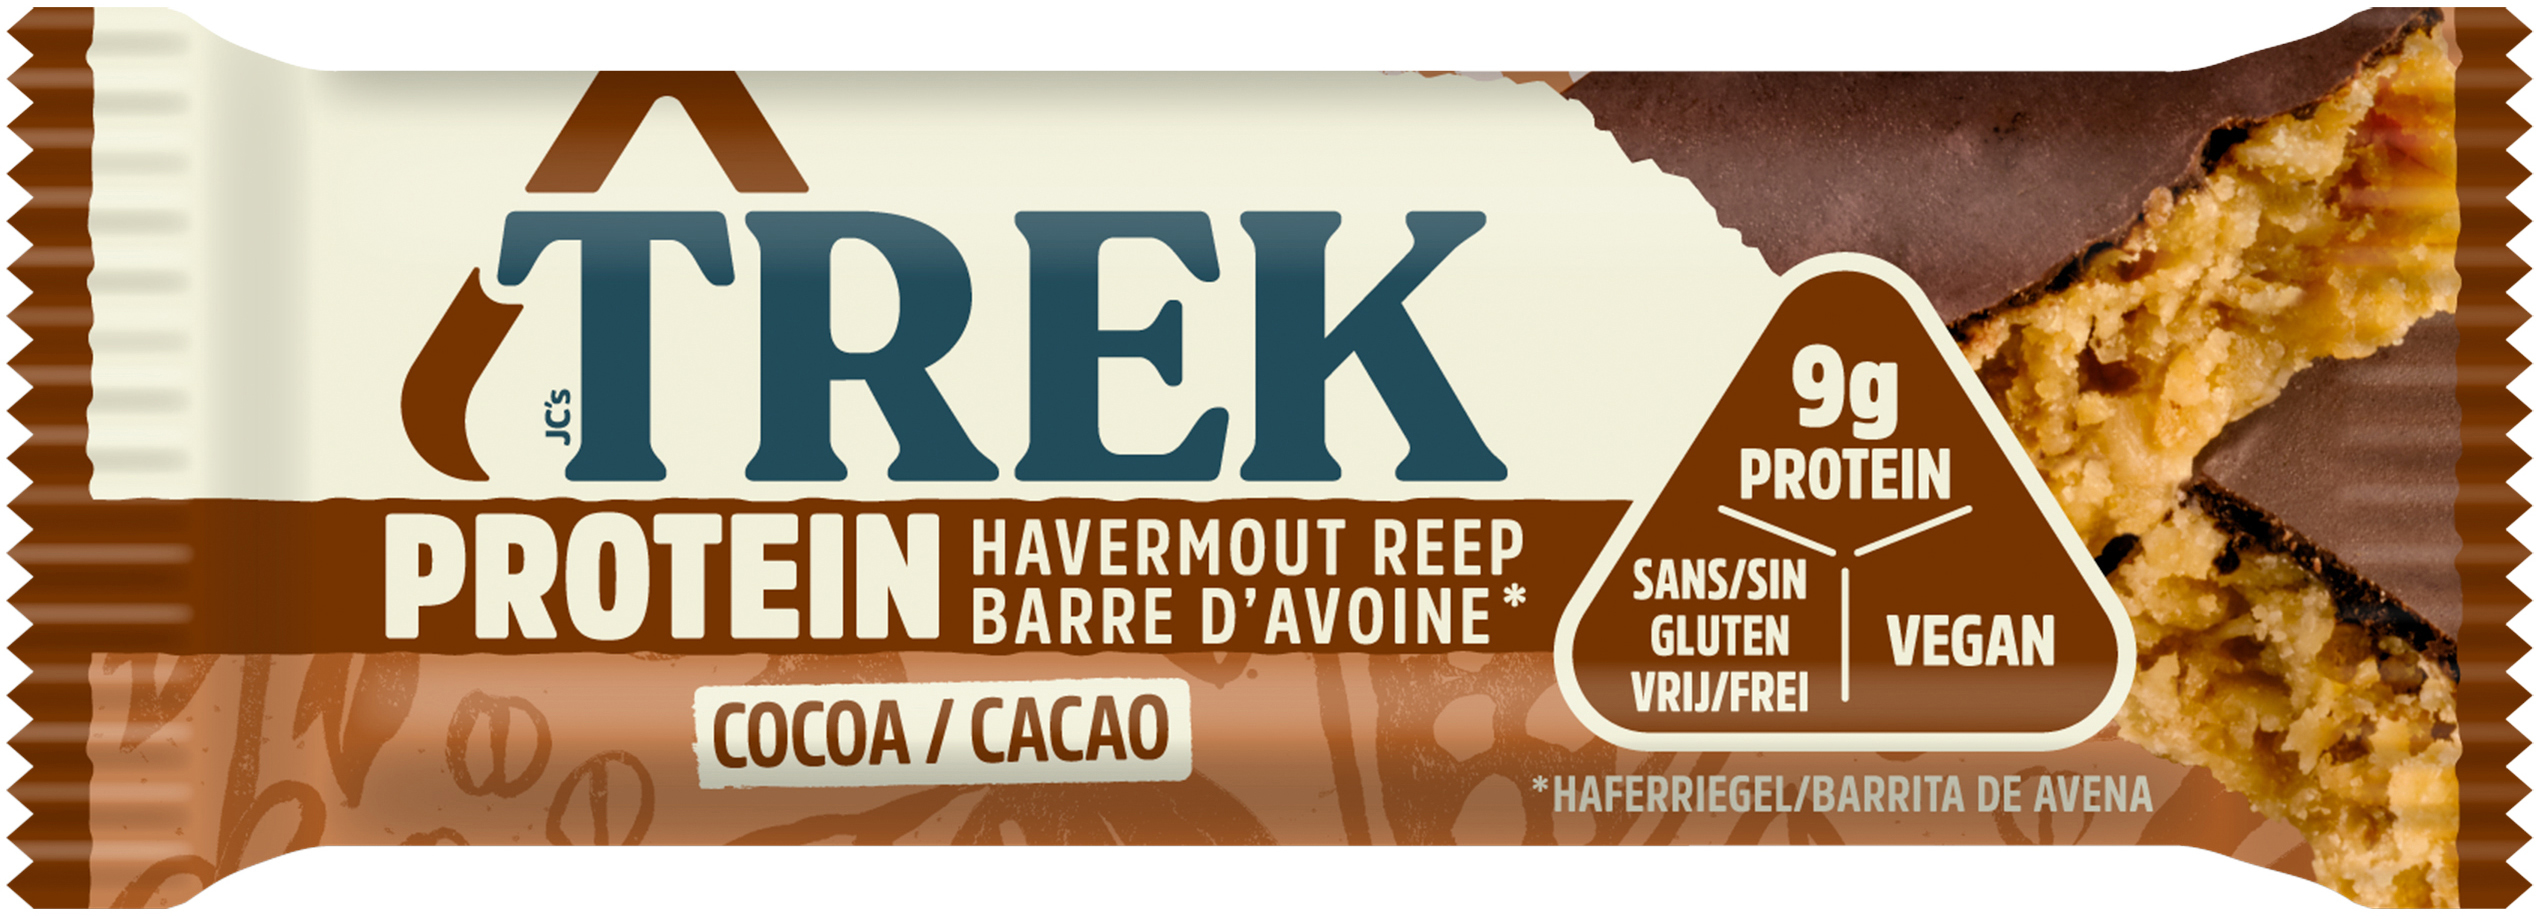 TREK Barres d'avoine protéinées 85521 16 pcs. Cocoa